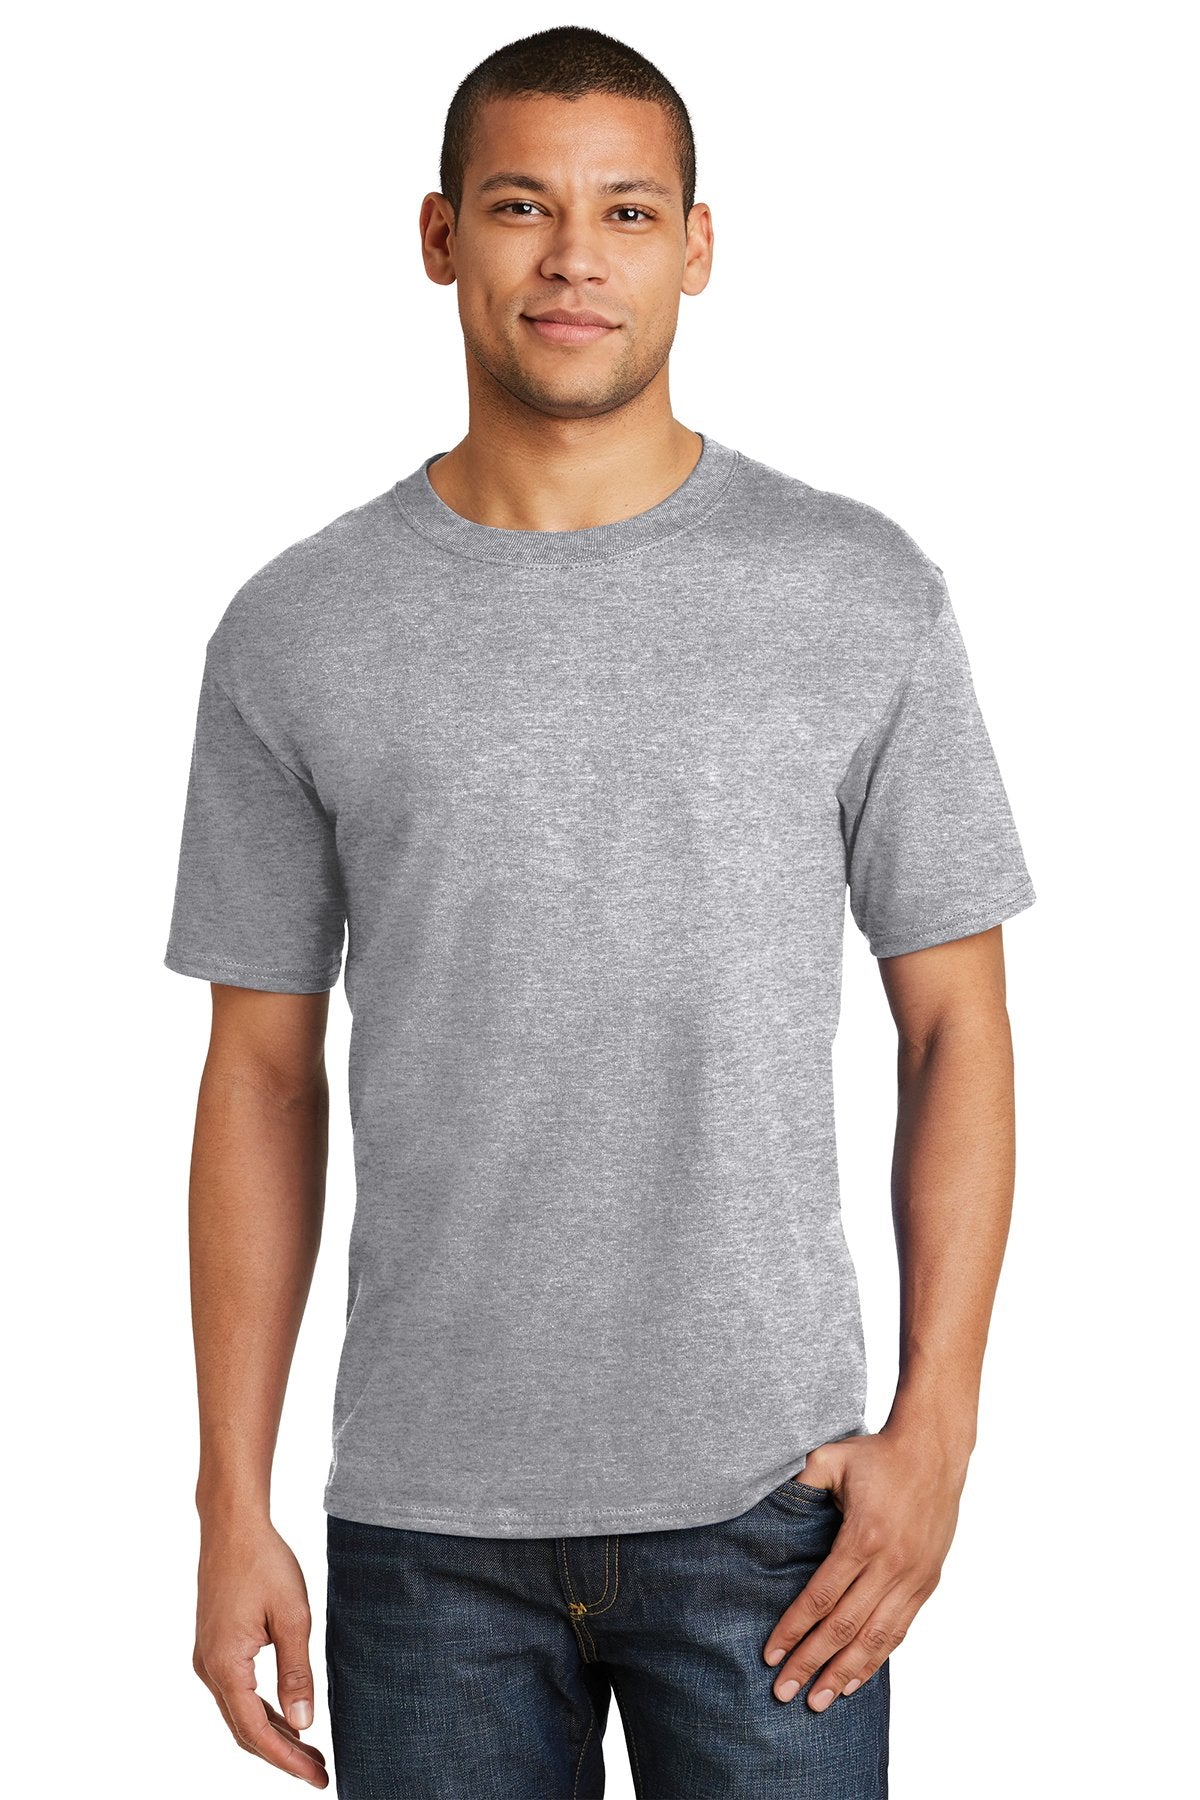 hanes beefy cotton t shirt 5180 light steel